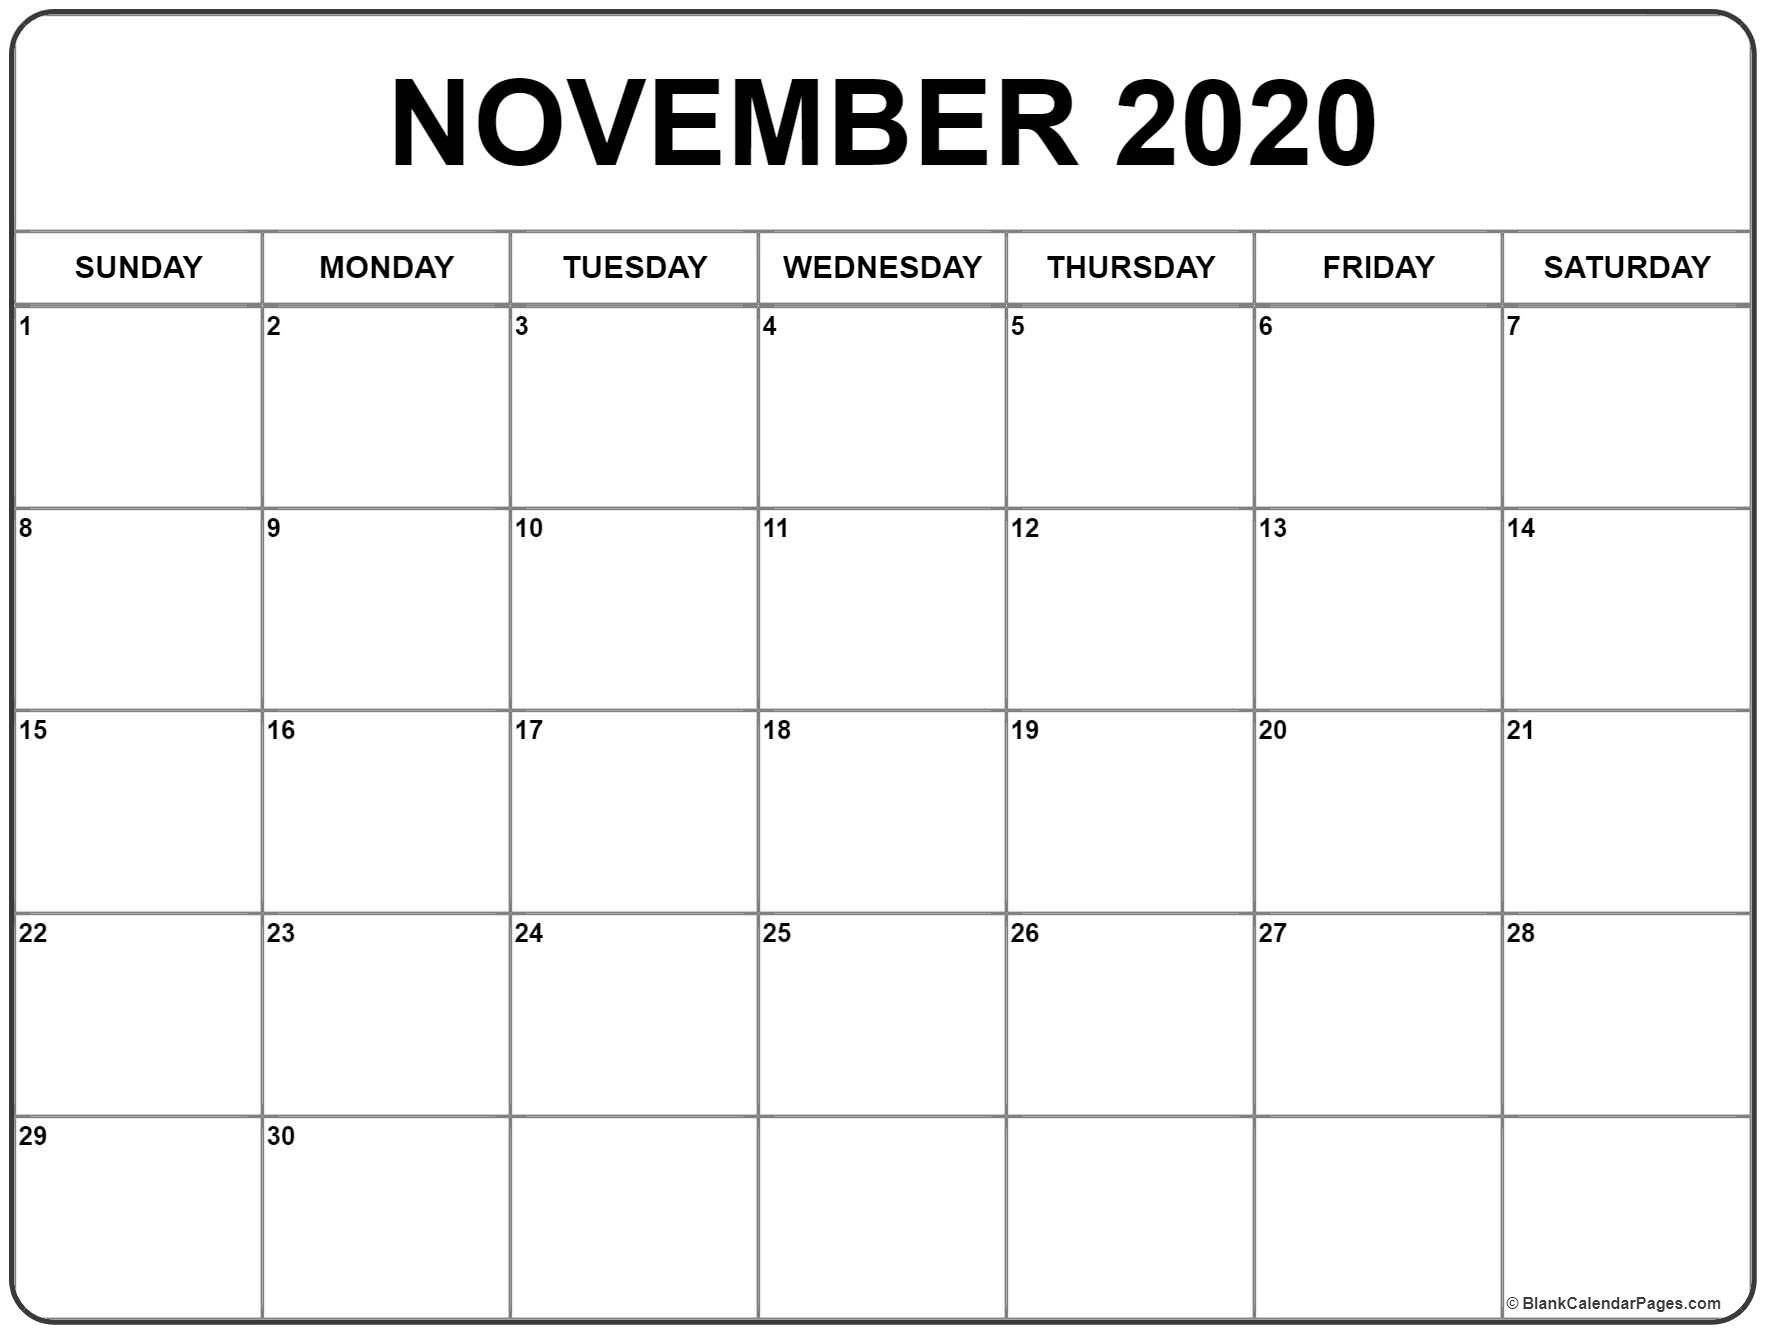 November 2020 Calendar | Free Printable Monthly Calendars 2020 Calendar For November